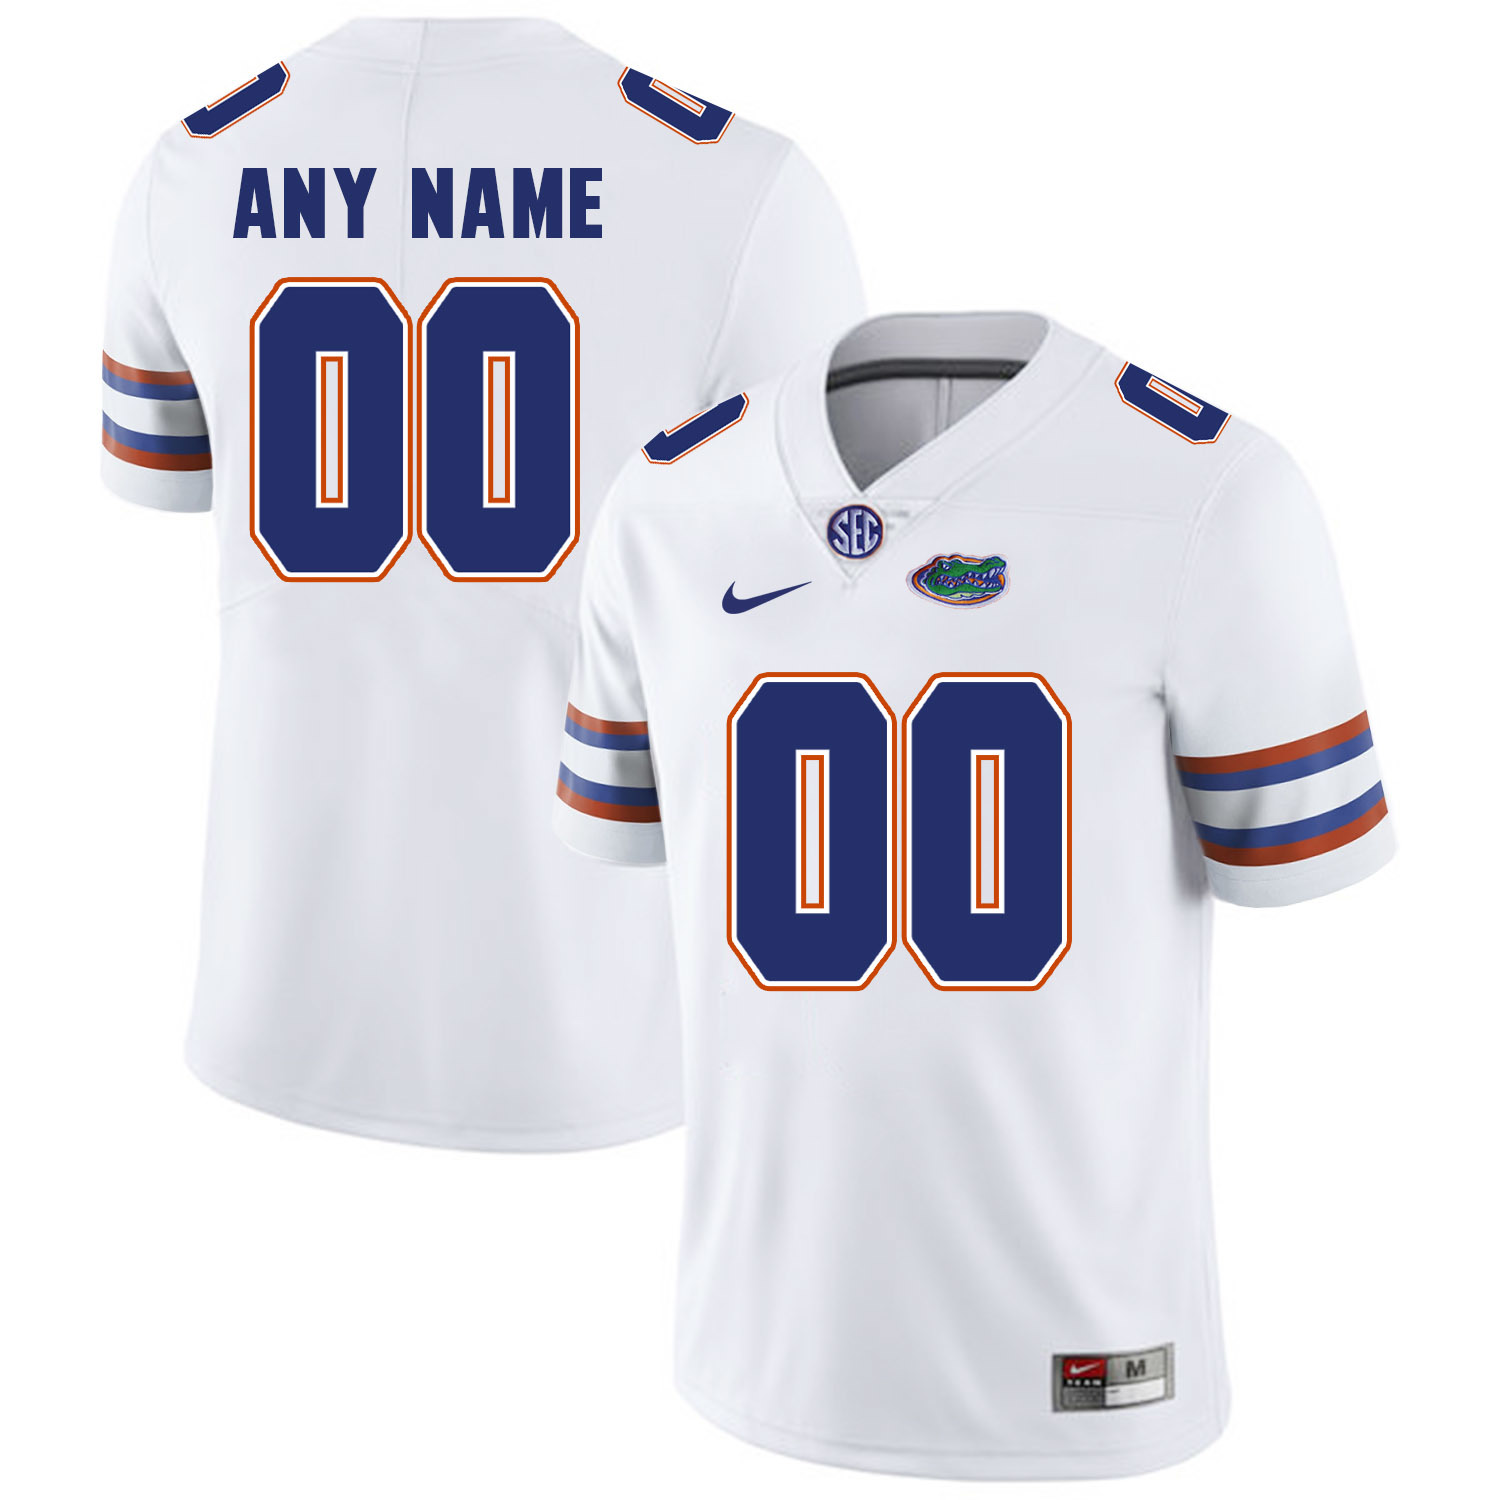 Men's Personalized Florida Gators College Football Custom Jersey White